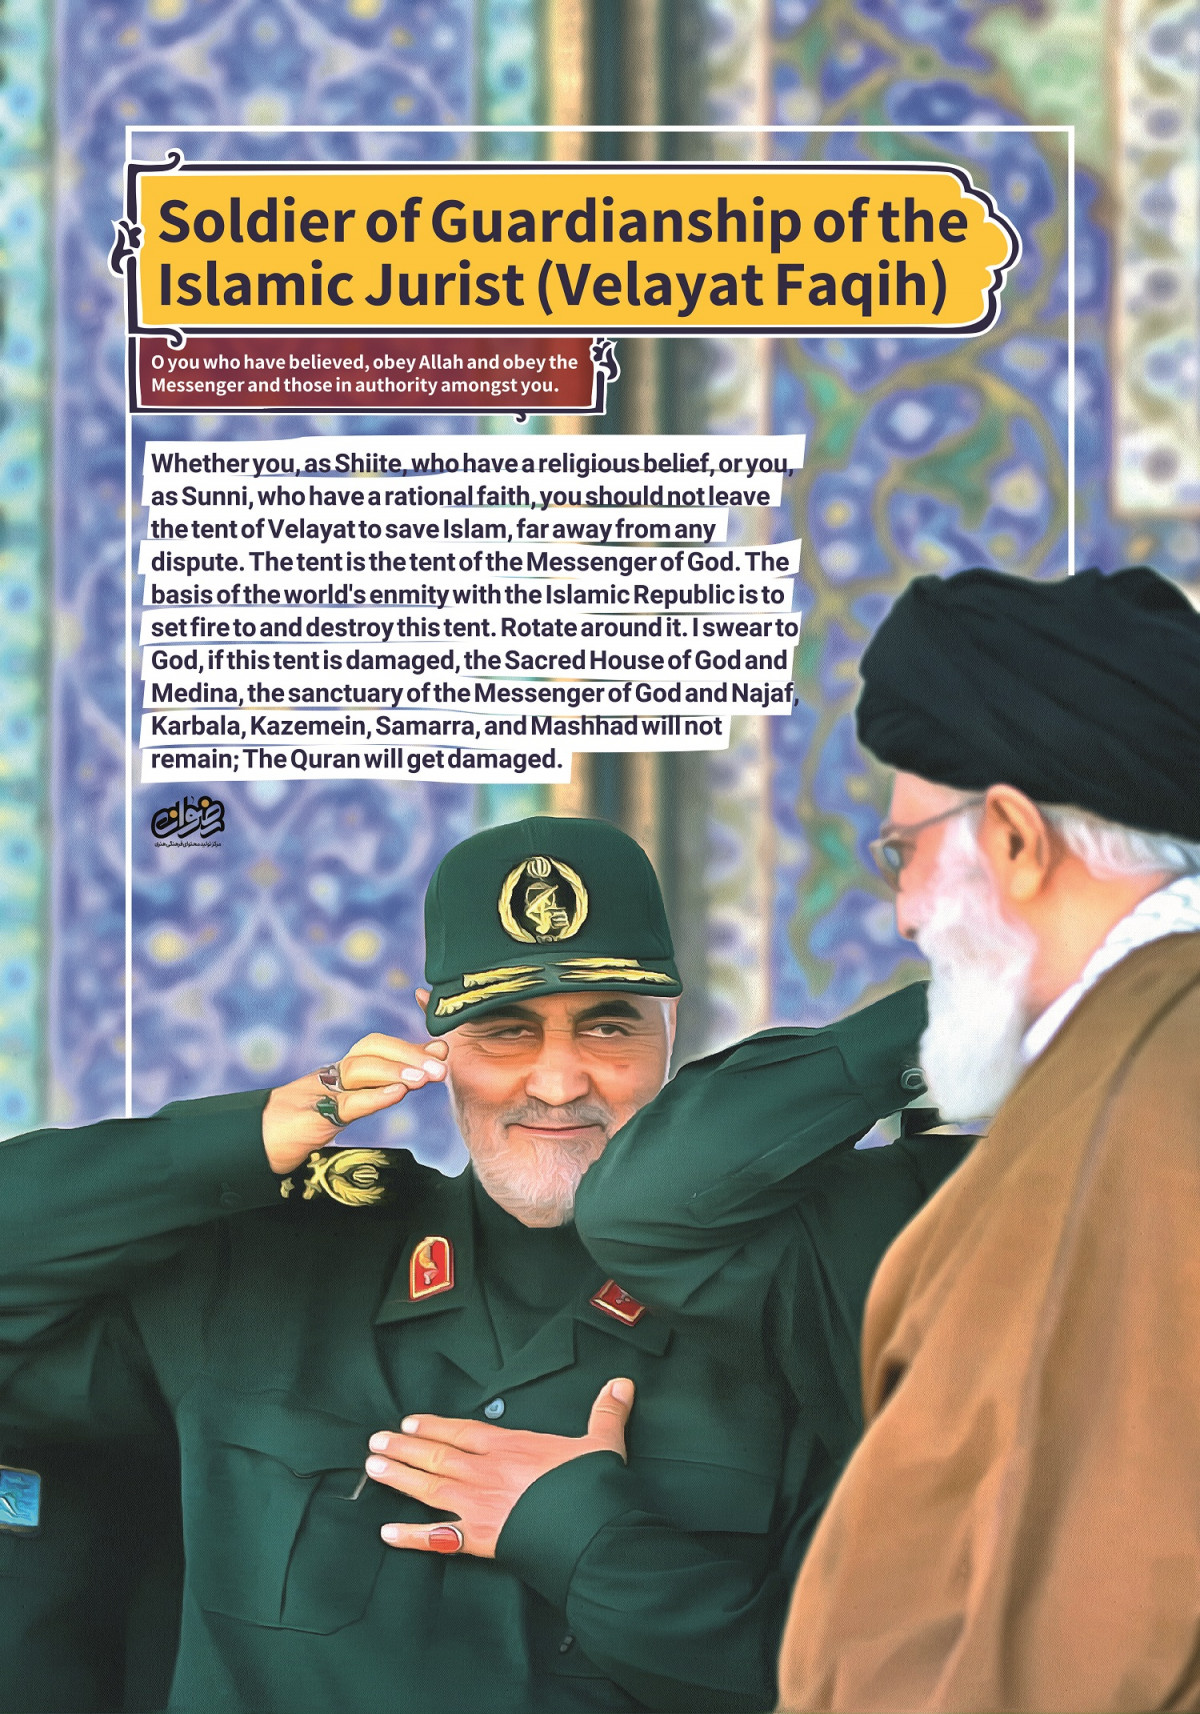 Soldier of Guardianship of the Islamic Jurist (Velayat Faqih)